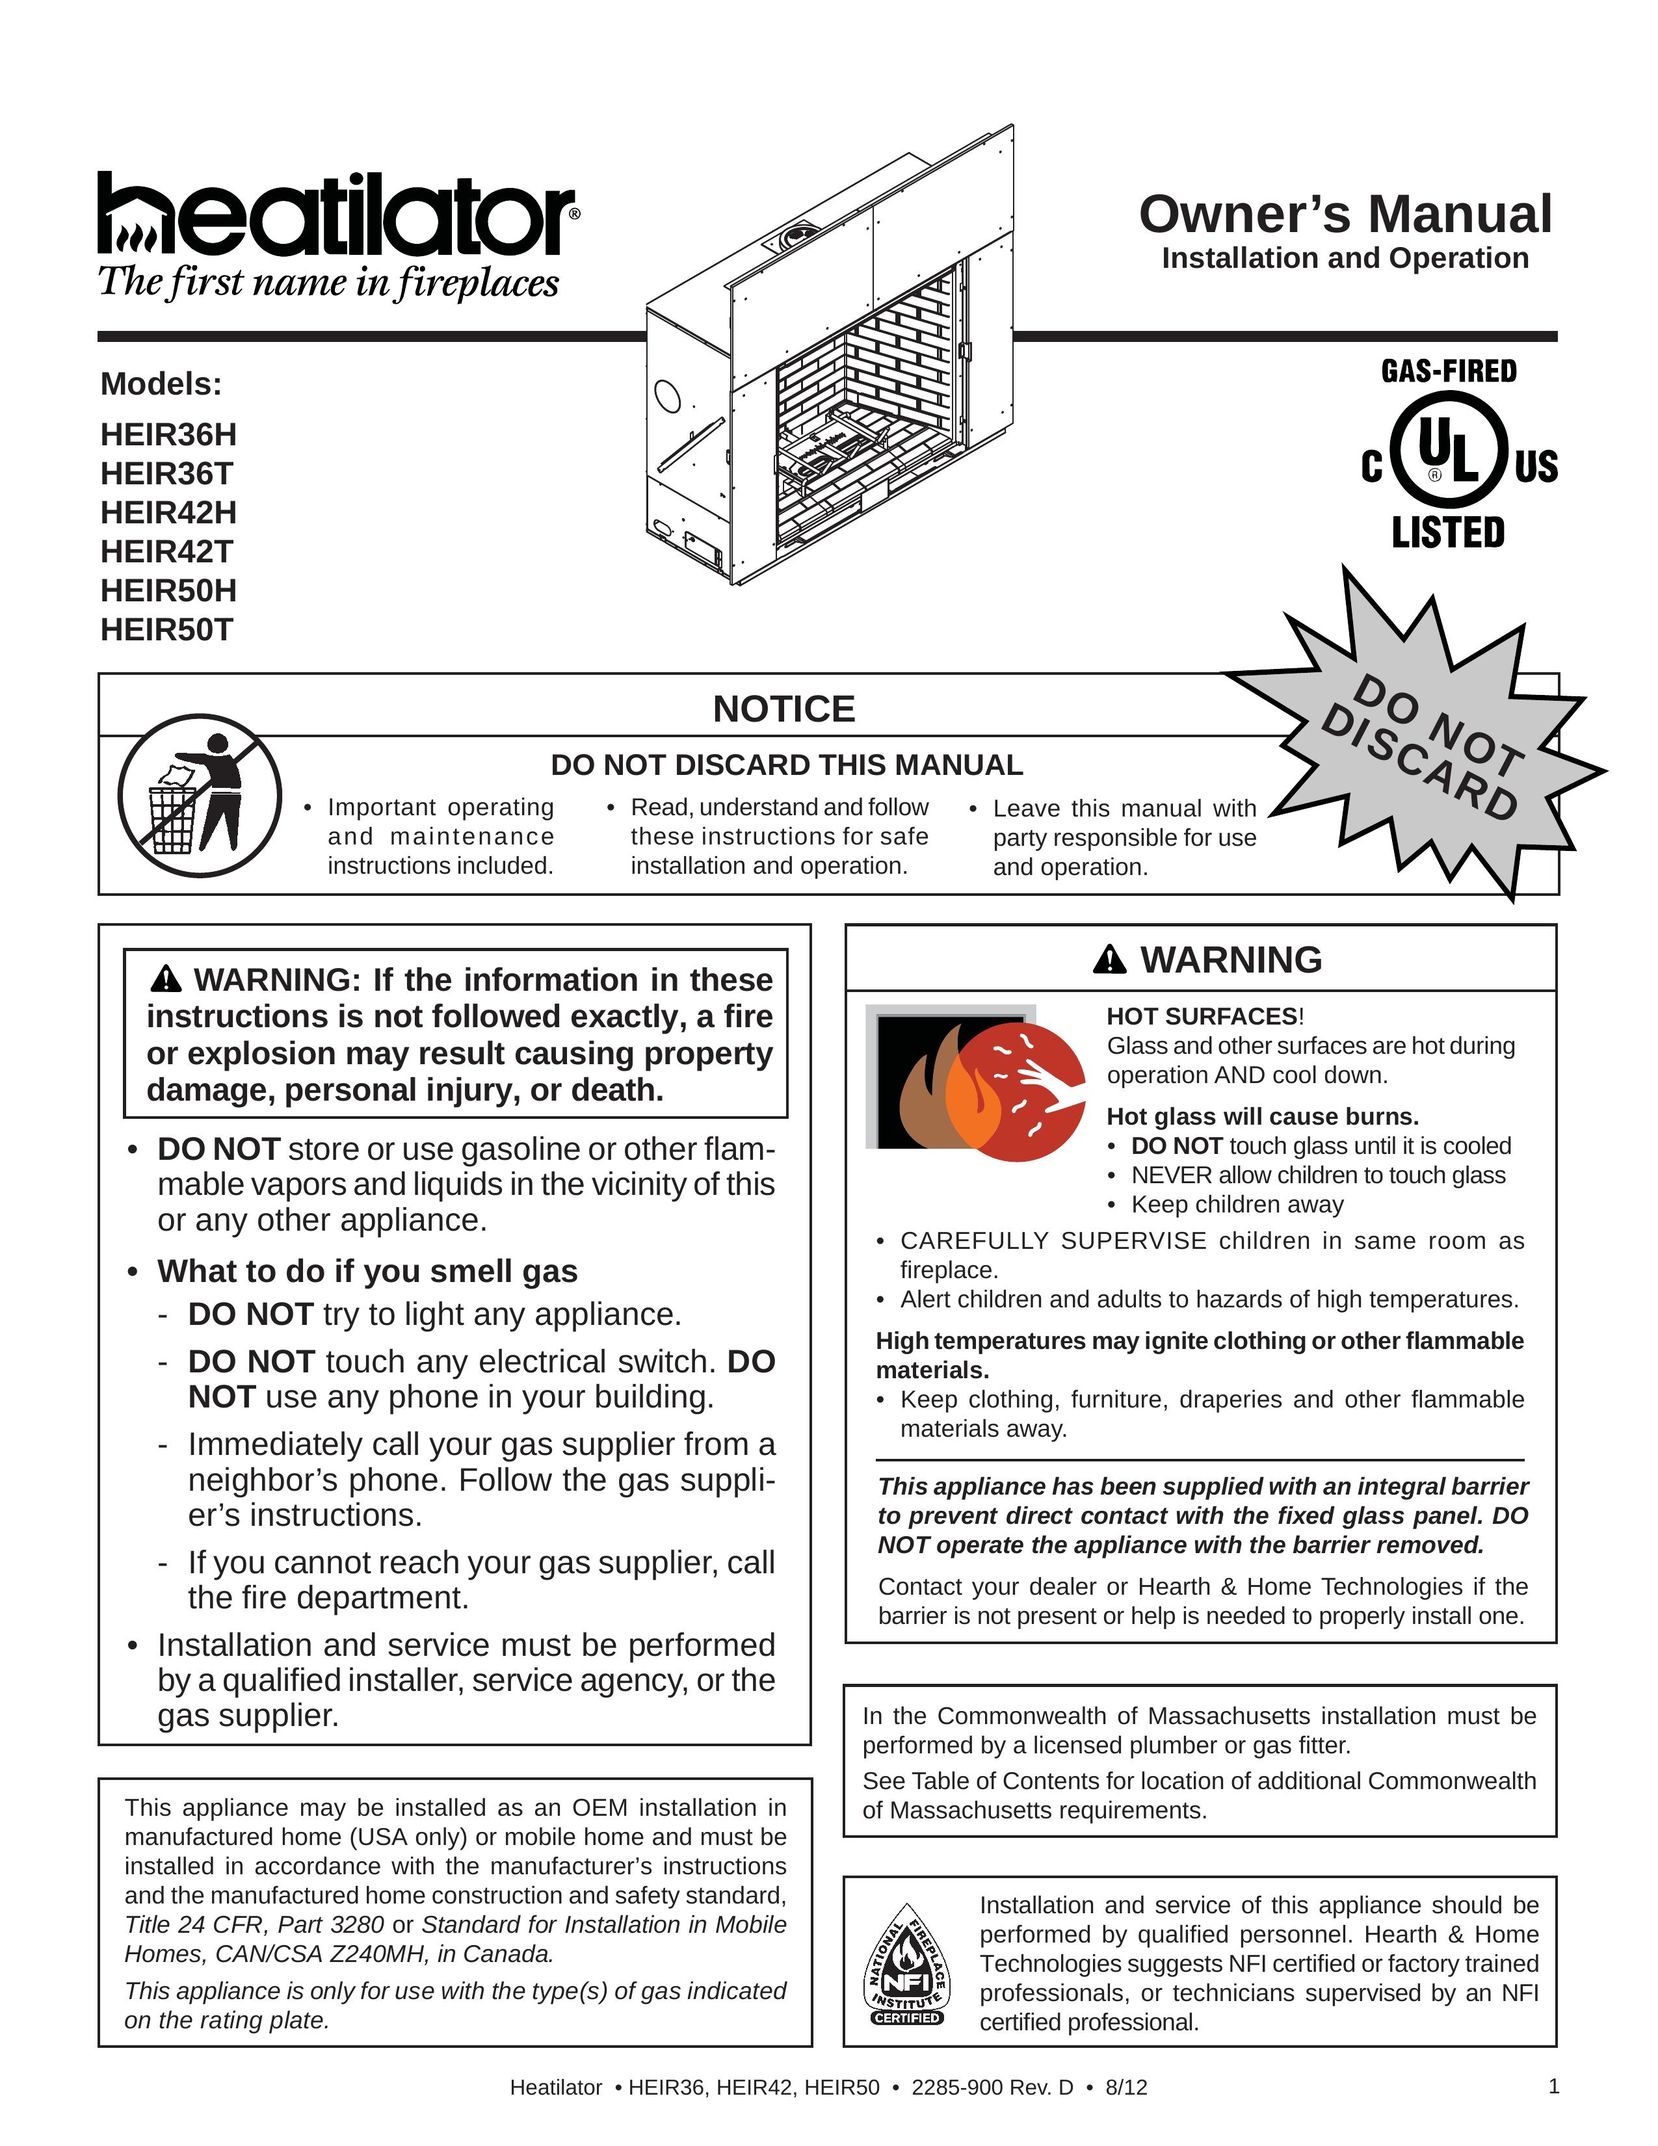 Heatiator HEIR36H Indoor Fireplace User Manual